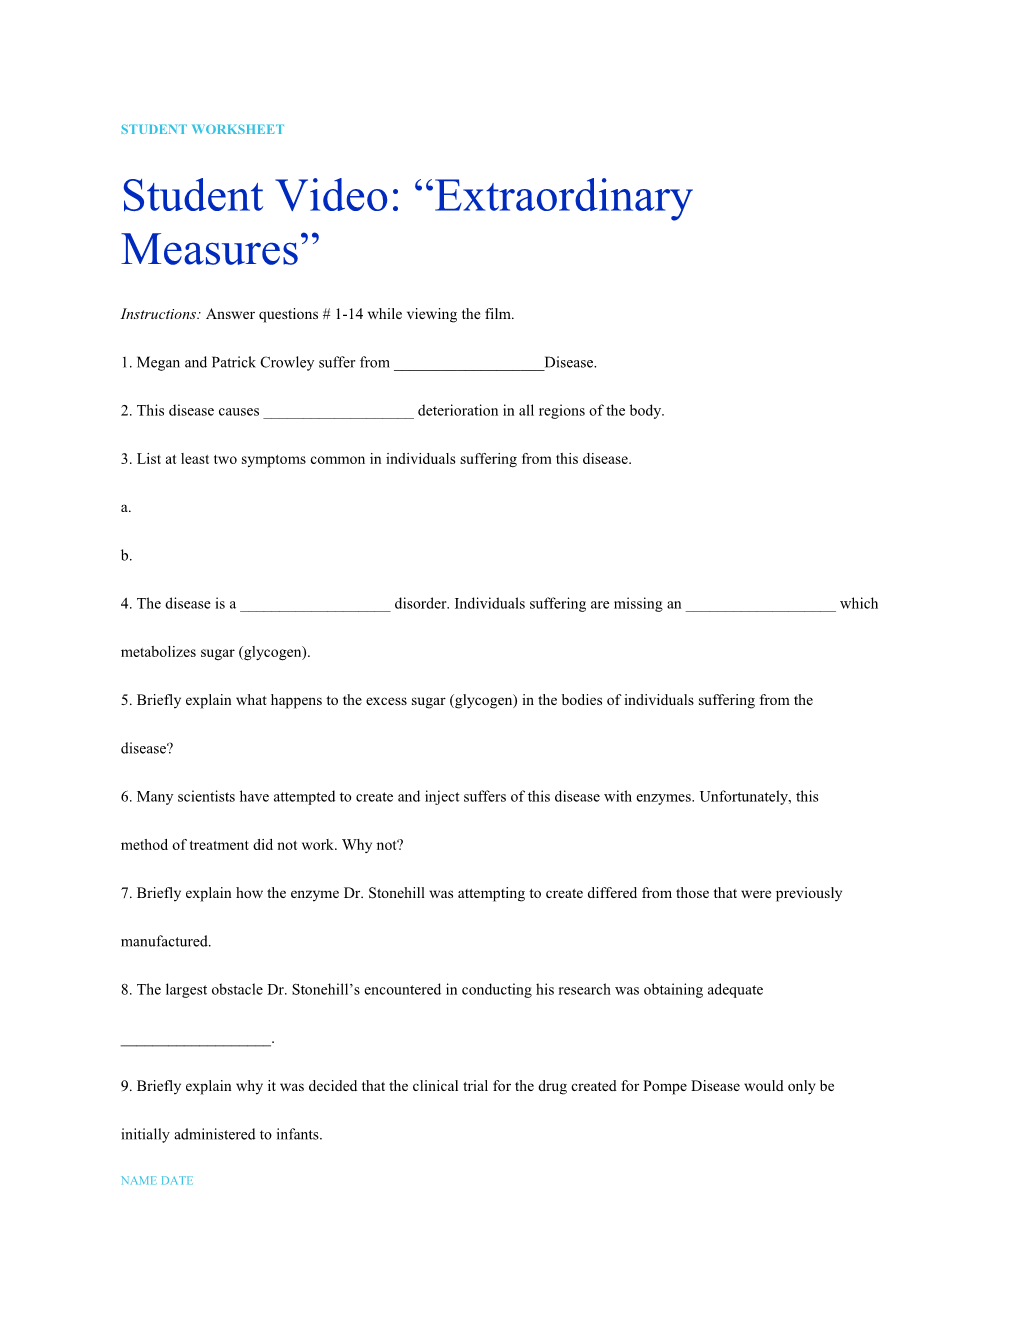 Student Video: Extraordinary Measures